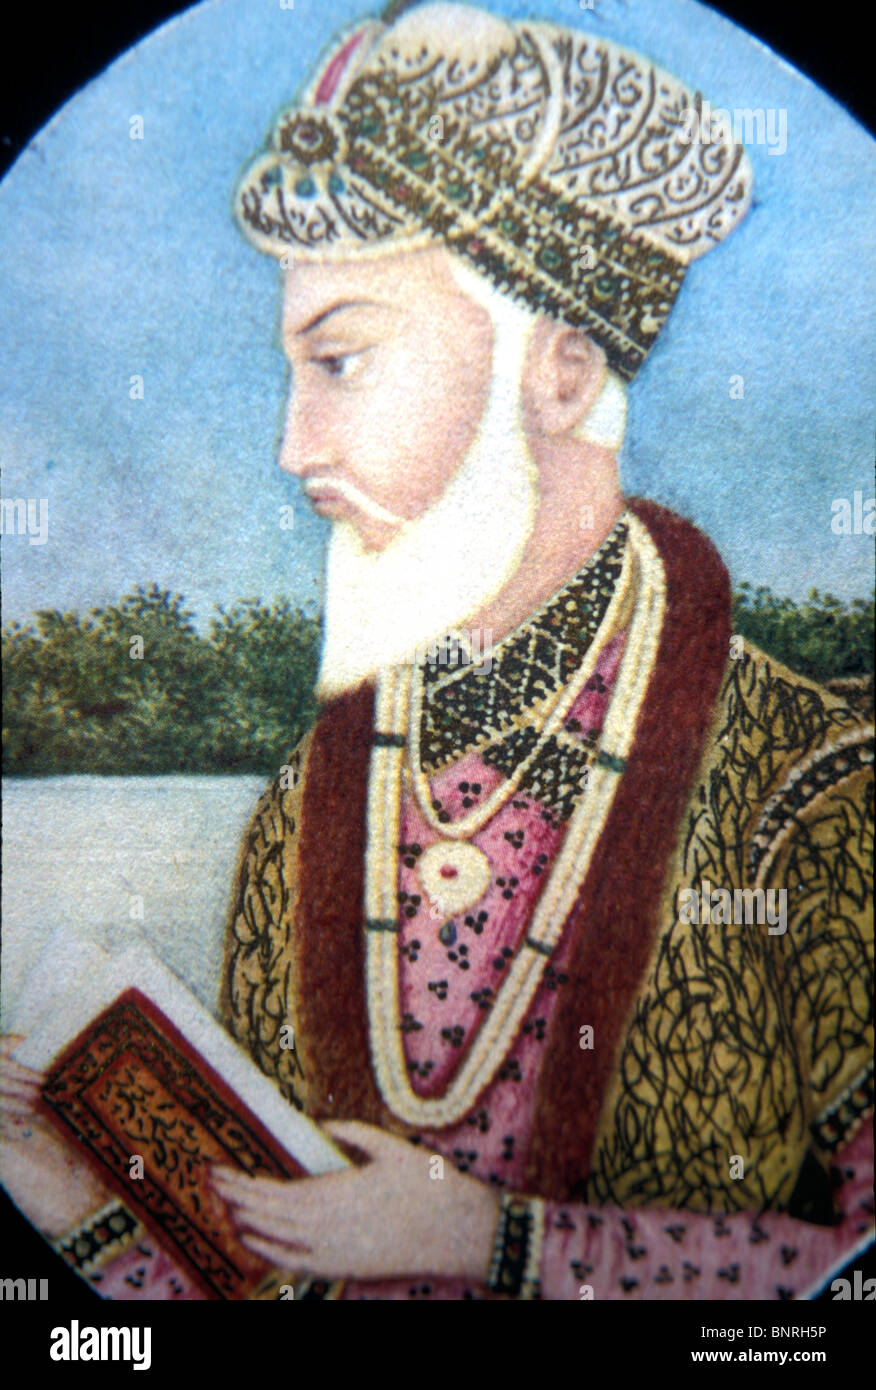 Portrait de Muhi-ud-DIN Muhammad Aurangzeb Bahadur Alamgir I le sixième empereur moghol de l'Inde, (3 novembre 1618 – 3 mars 1707) Banque D'Images